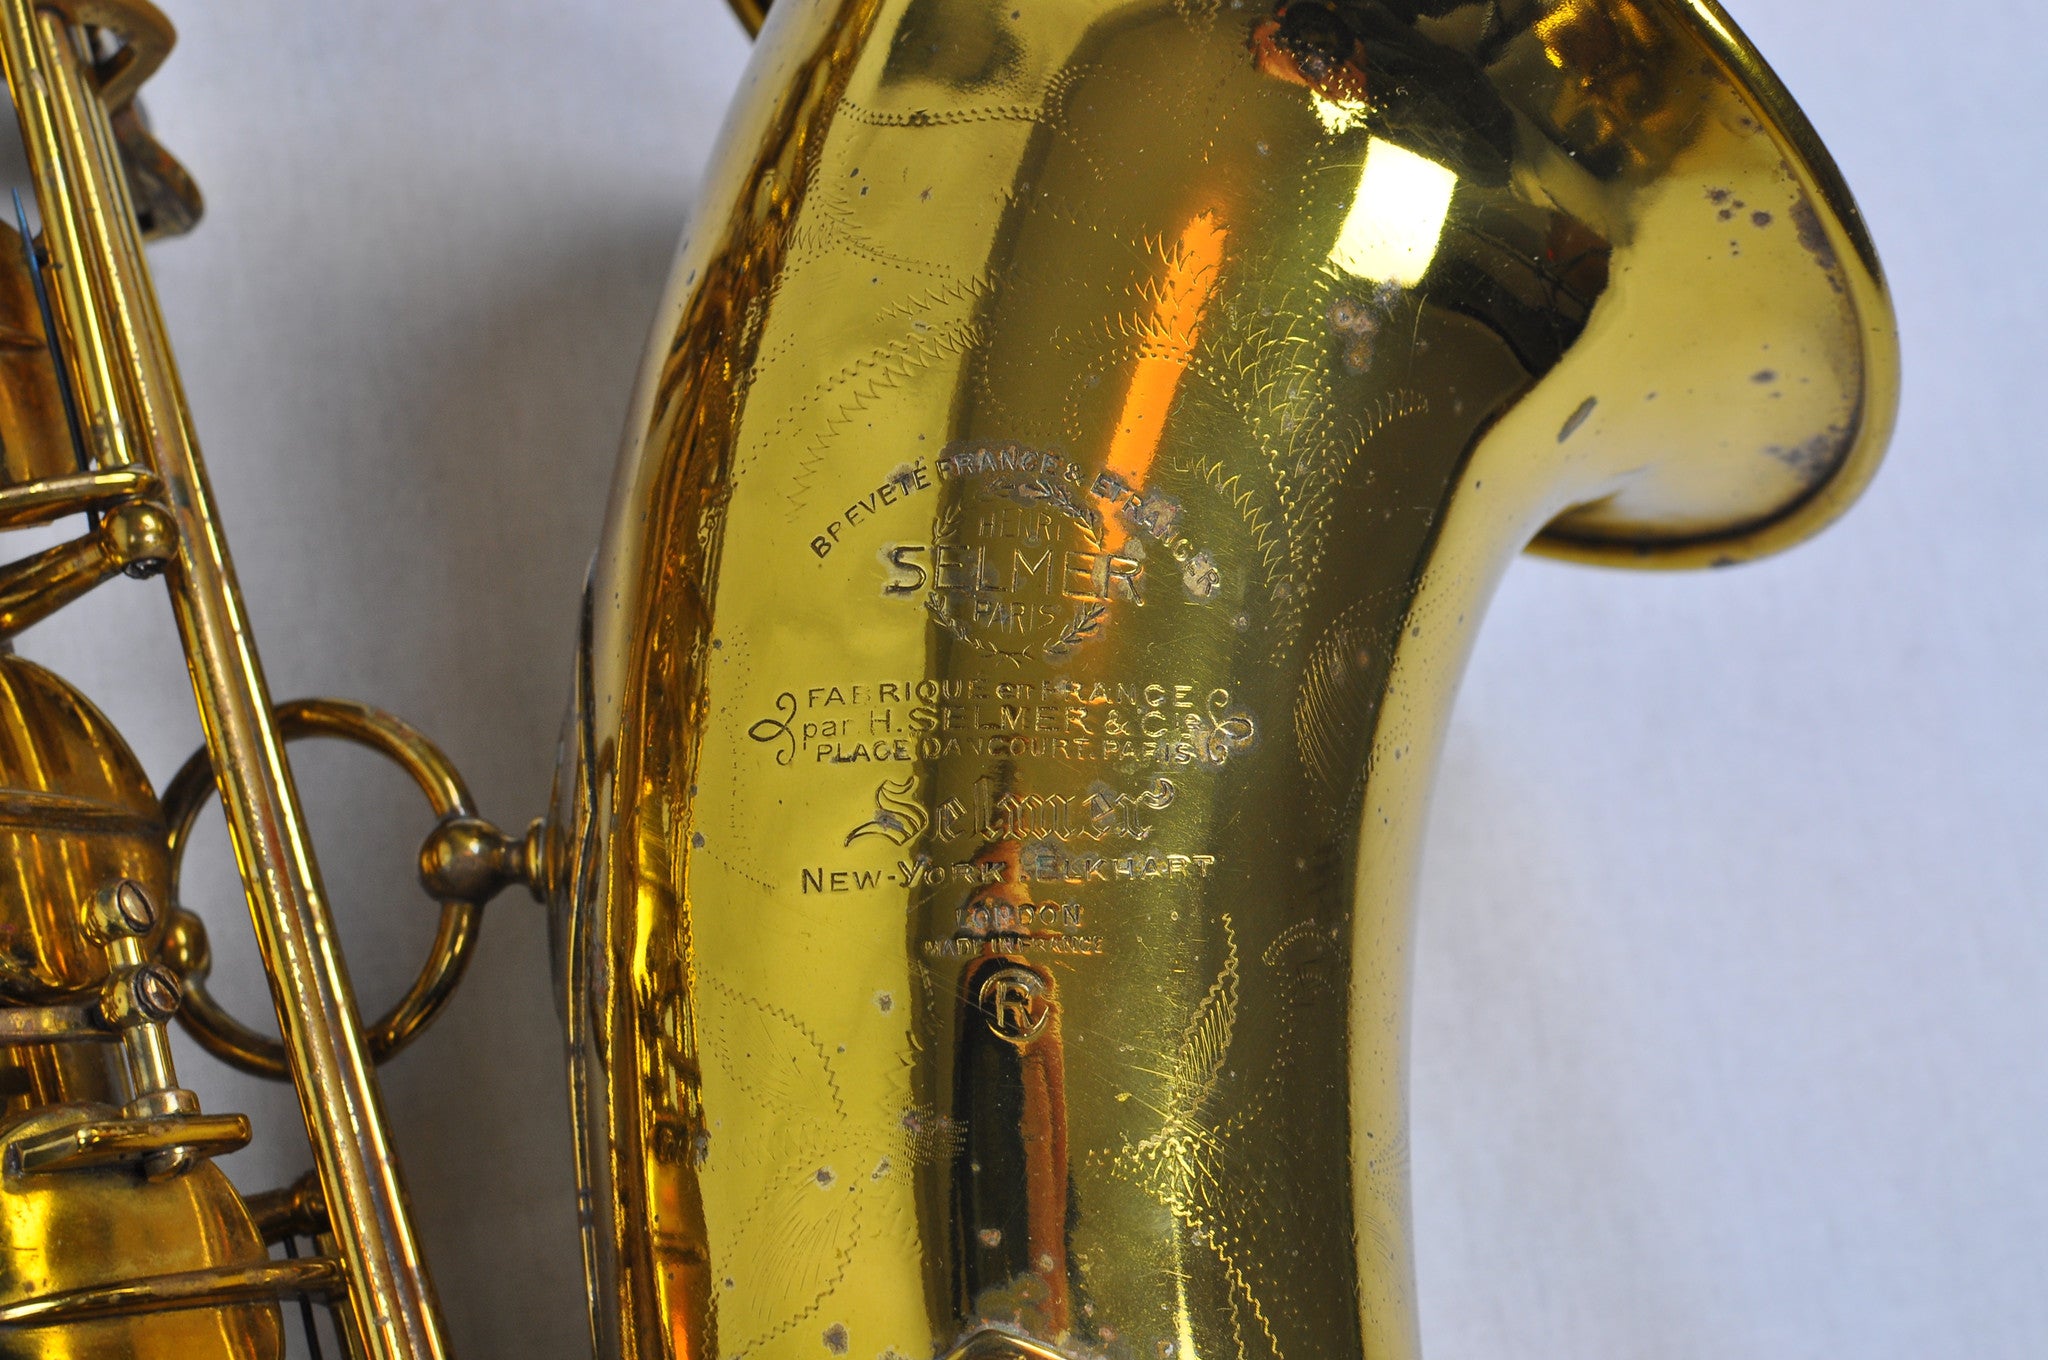 1959 Selmer Mark VI Tenor Saxophone 80,xxx